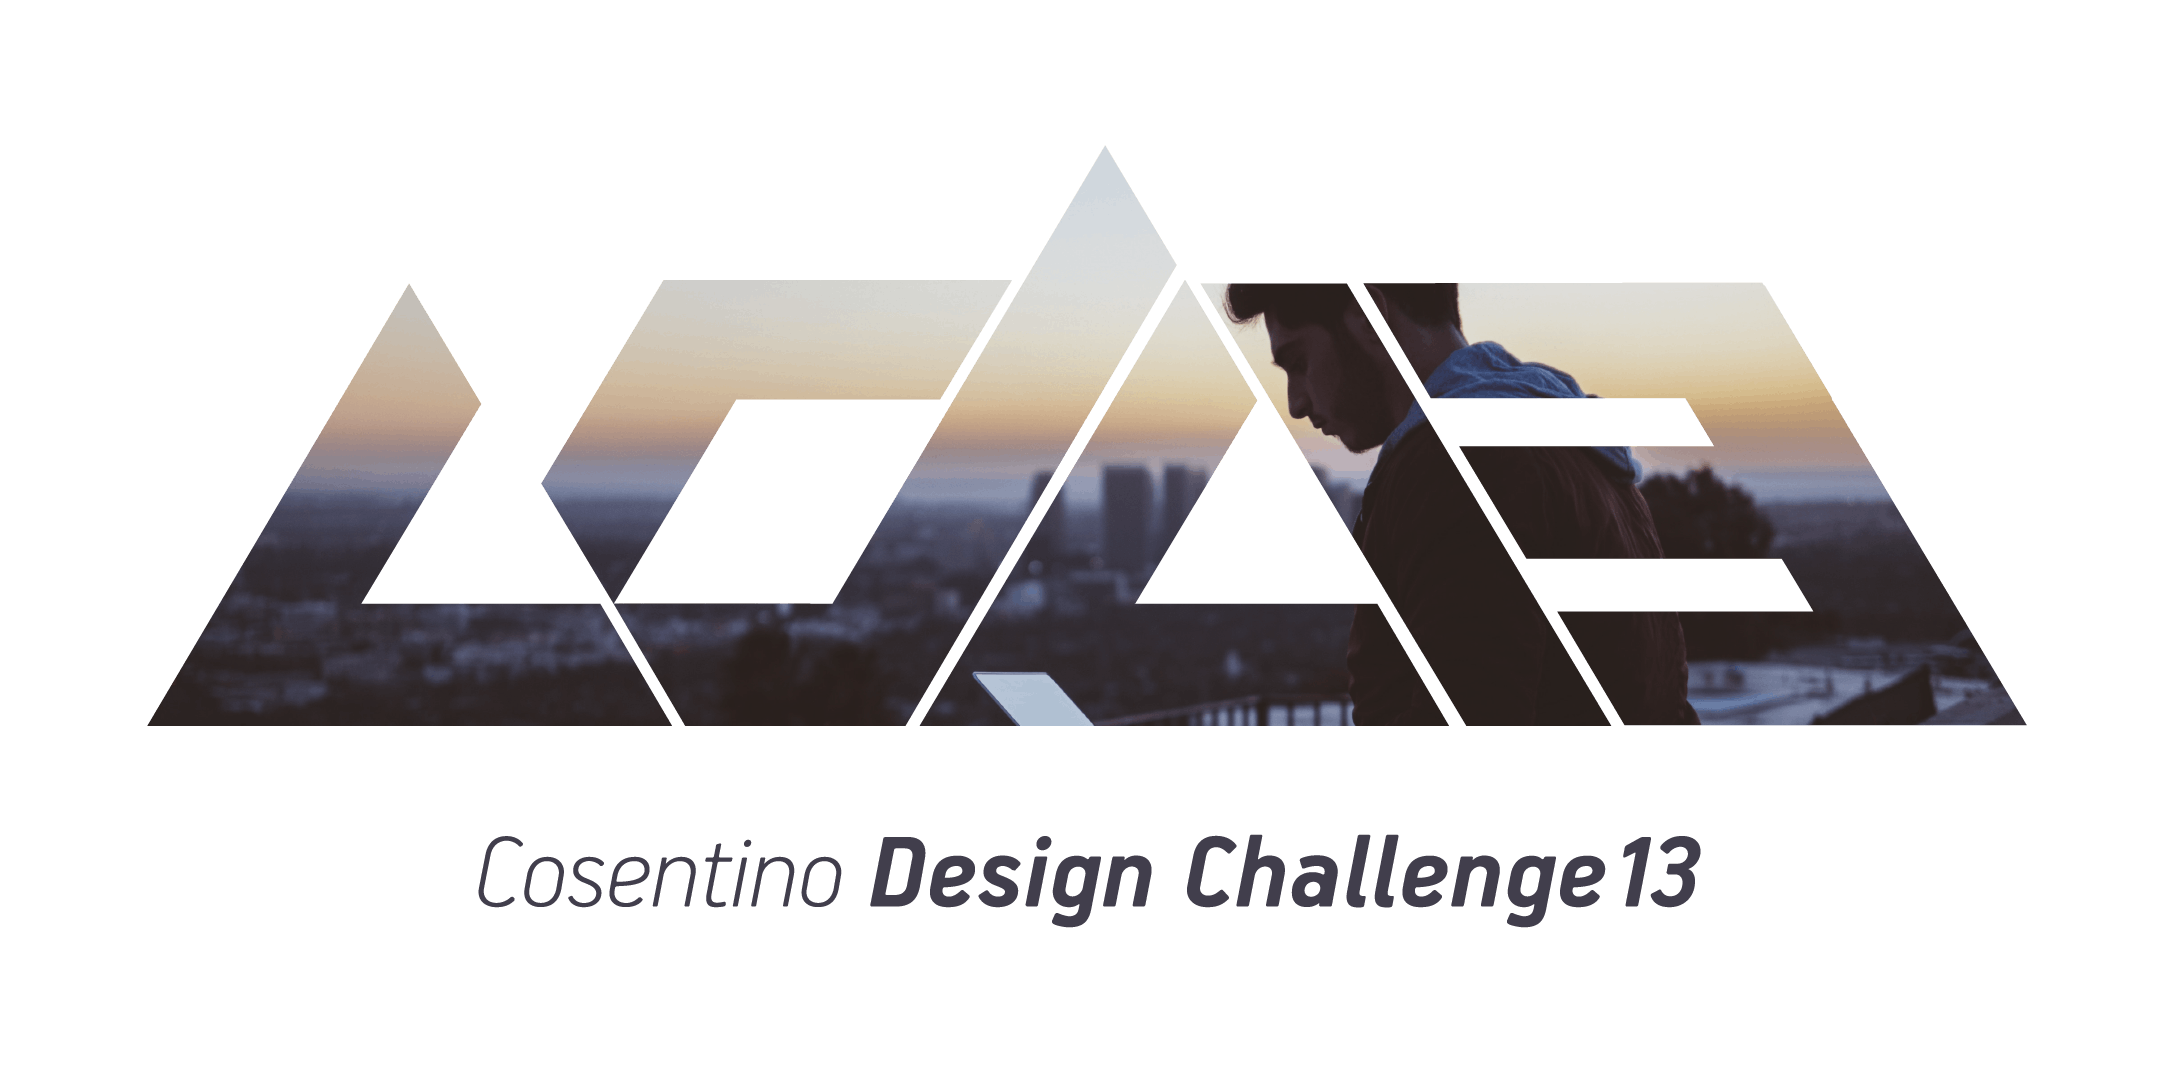 Image 33 of logocd13 imagen 1 in Cosentino Design Challenge 13 - Cosentino